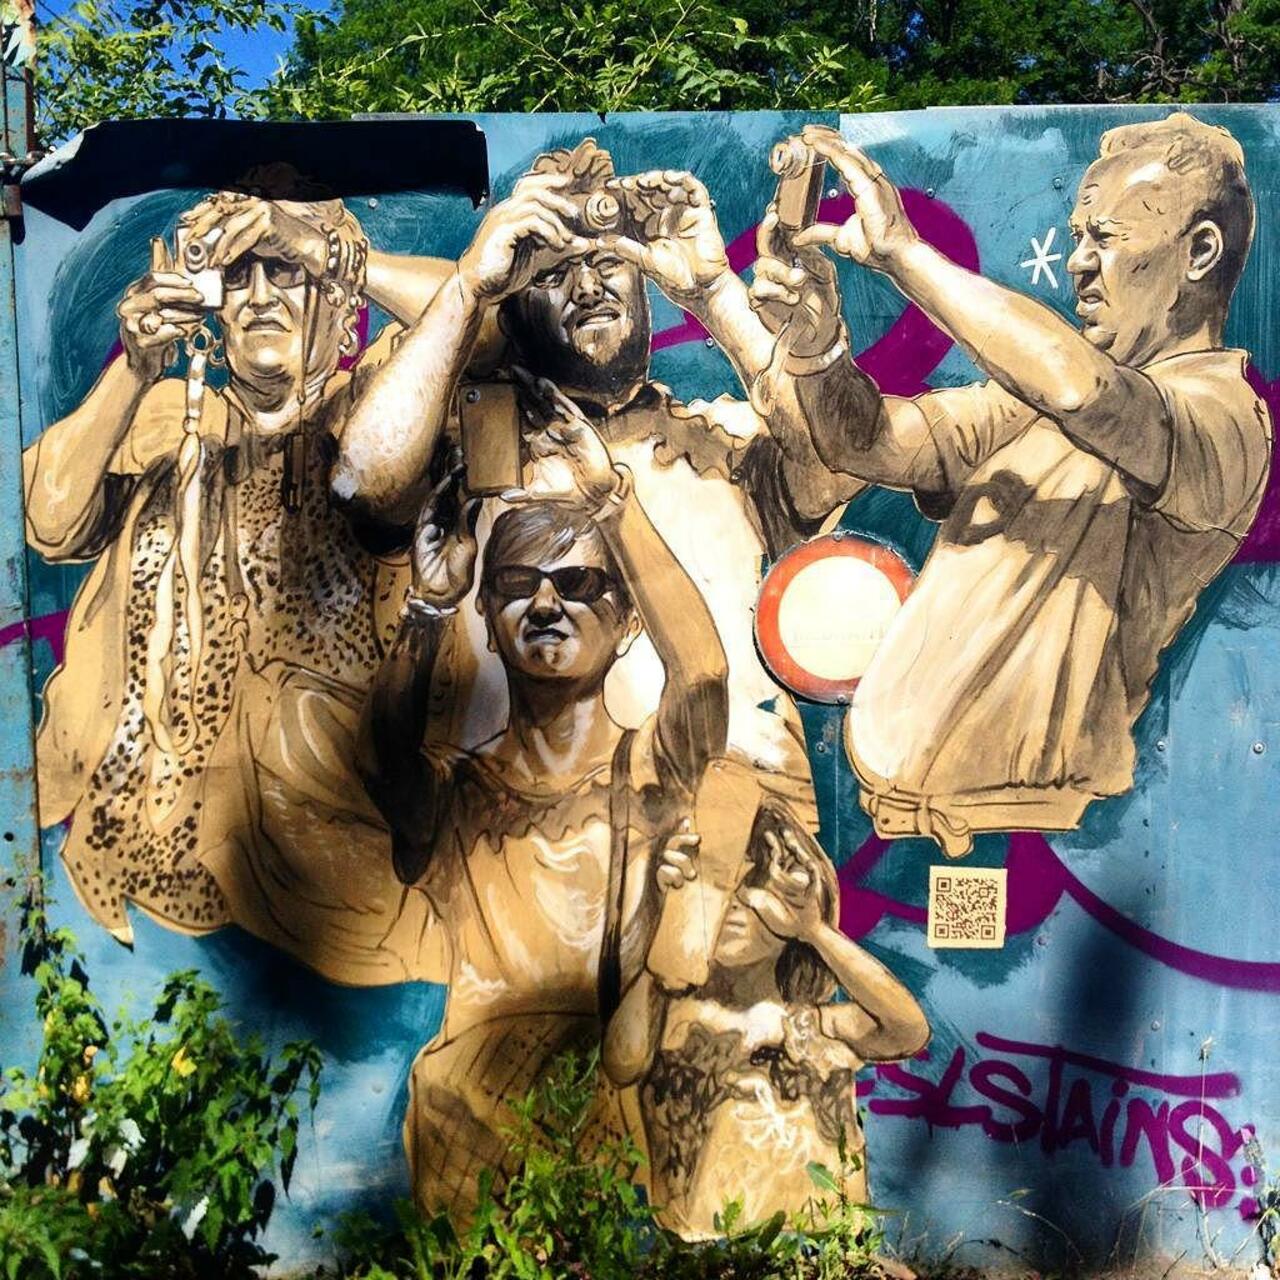 http://ift.tt/1KiqpQt #Paris #graffiti photo by ceky_art http://ift.tt/1jWRcJs #StreetArt http://t.co/40TLU2HoXm